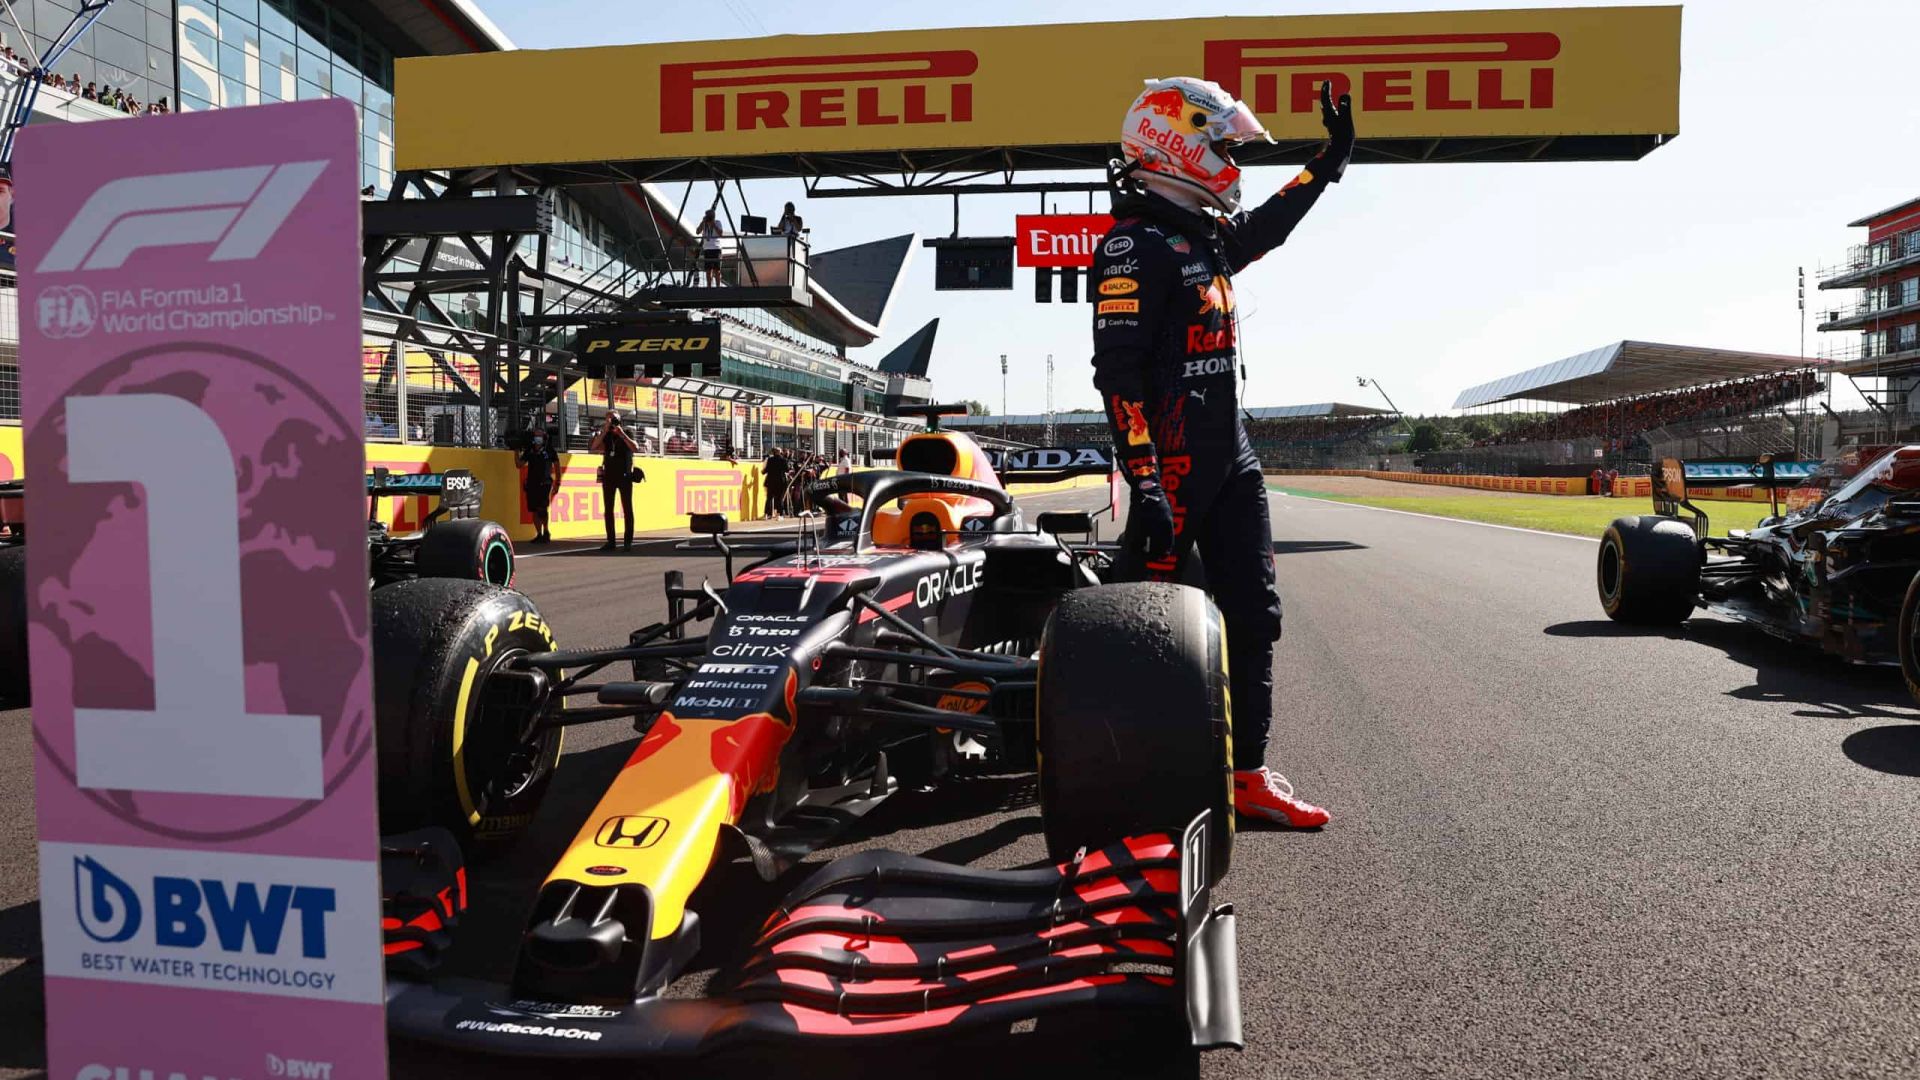 2021 British Grand Prix Sprint Qualifying Race - Max Verstappen (image courtesy Red Bull Racing)